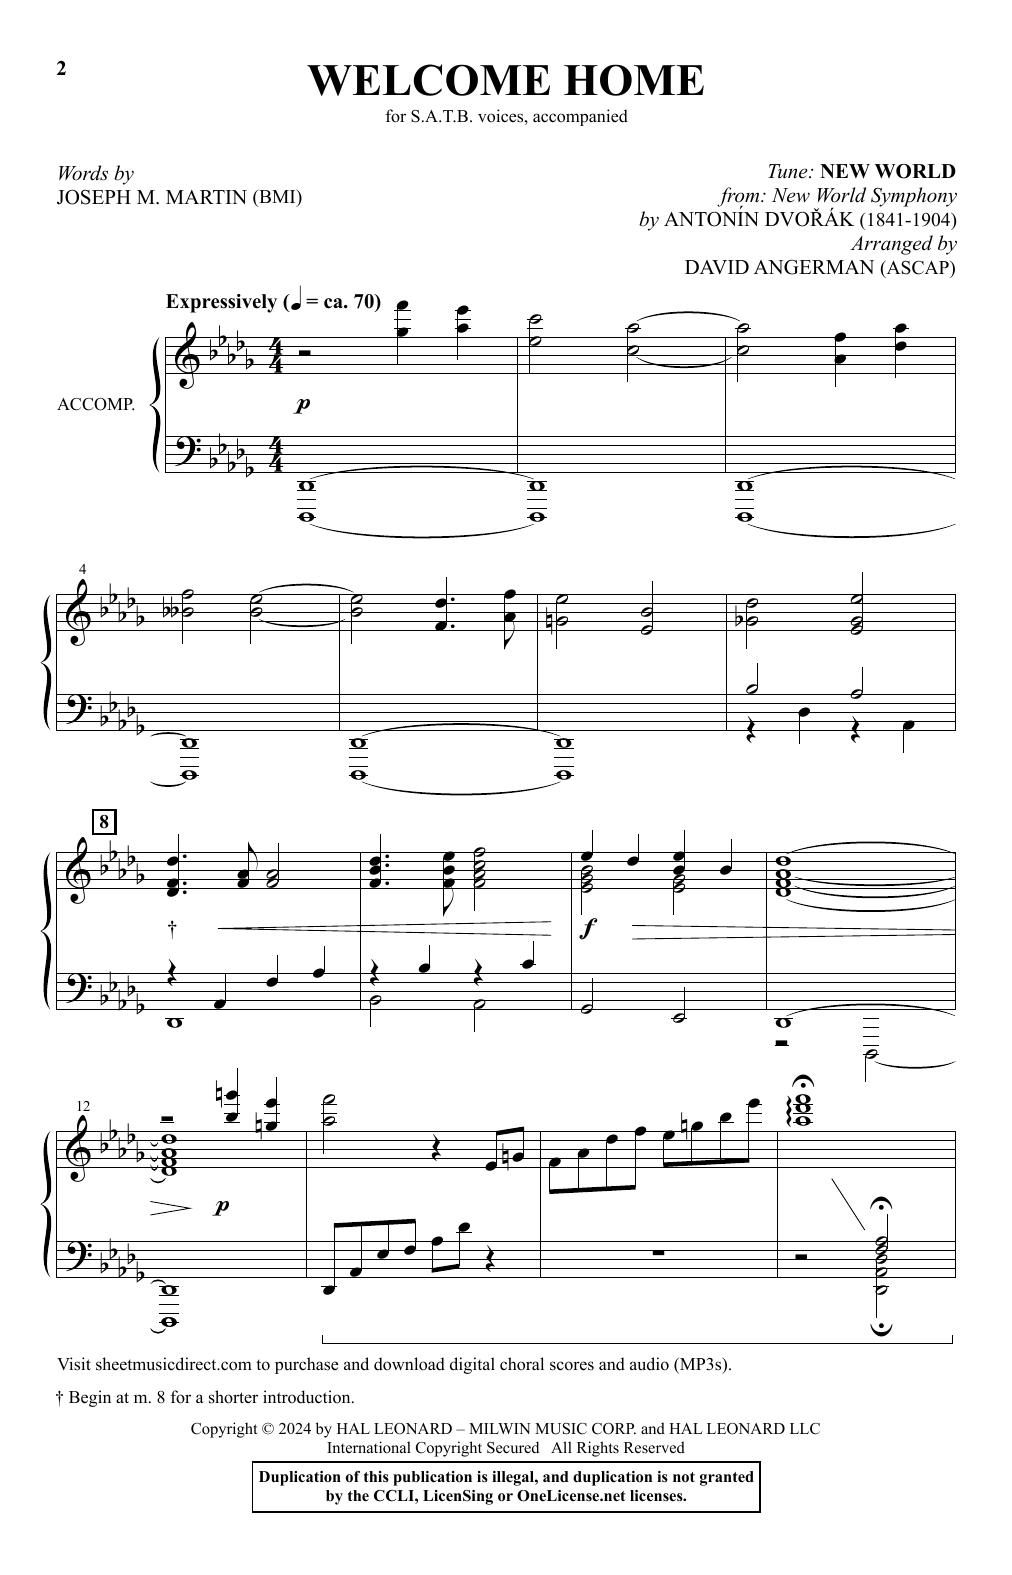 Joseph M. Martin Welcome Home (arr. David Angerman) Sheet Music Notes & Chords for SATB Choir - Download or Print PDF